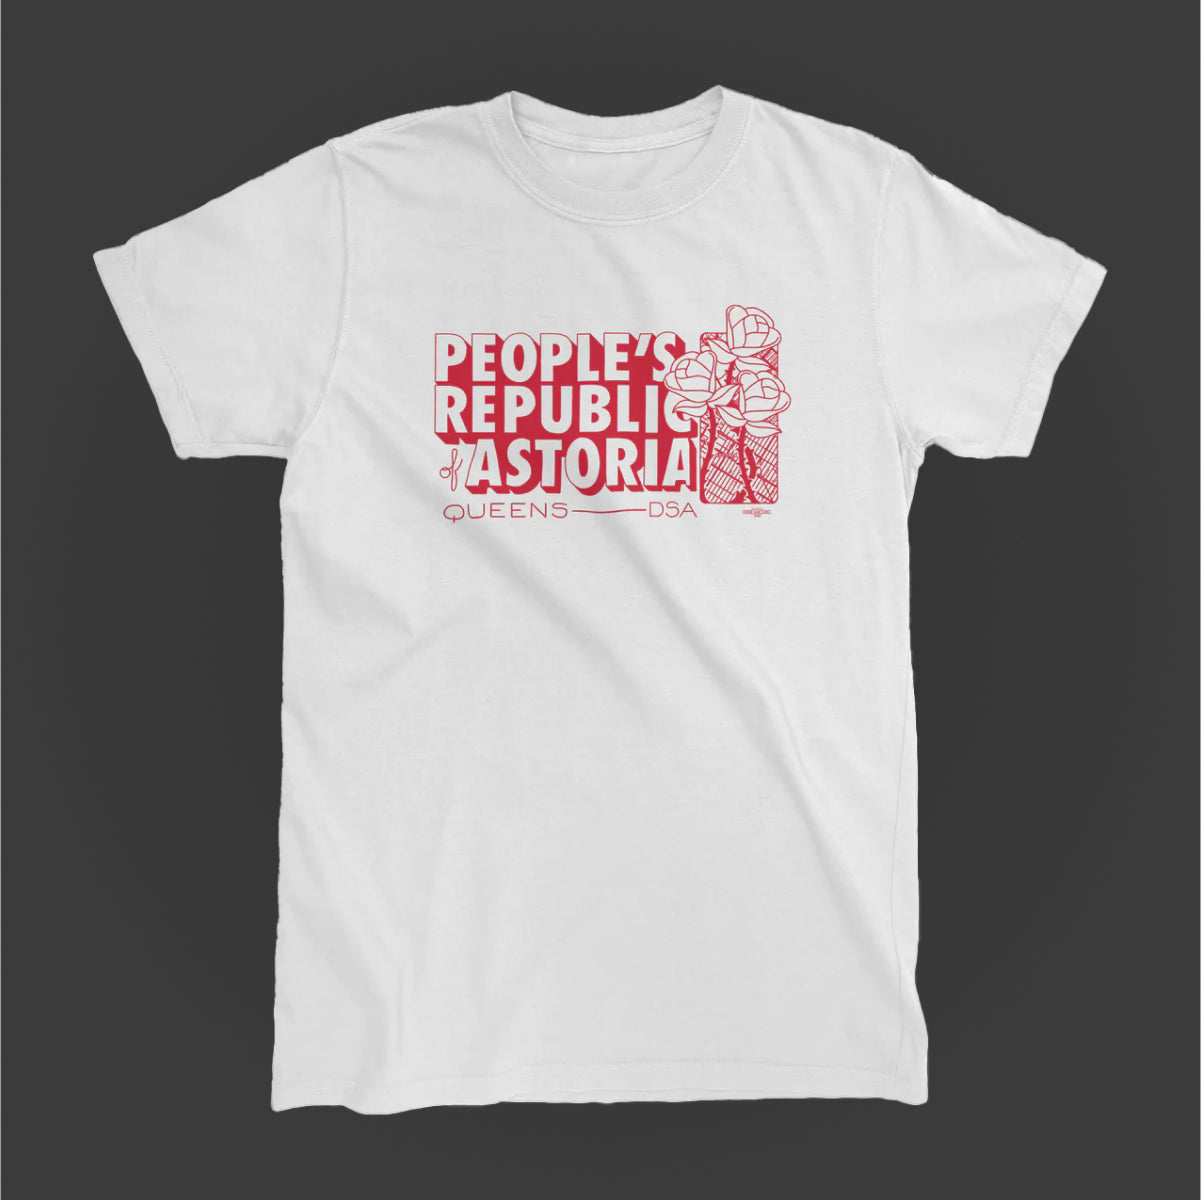 Republic of Astoria T-Shirt